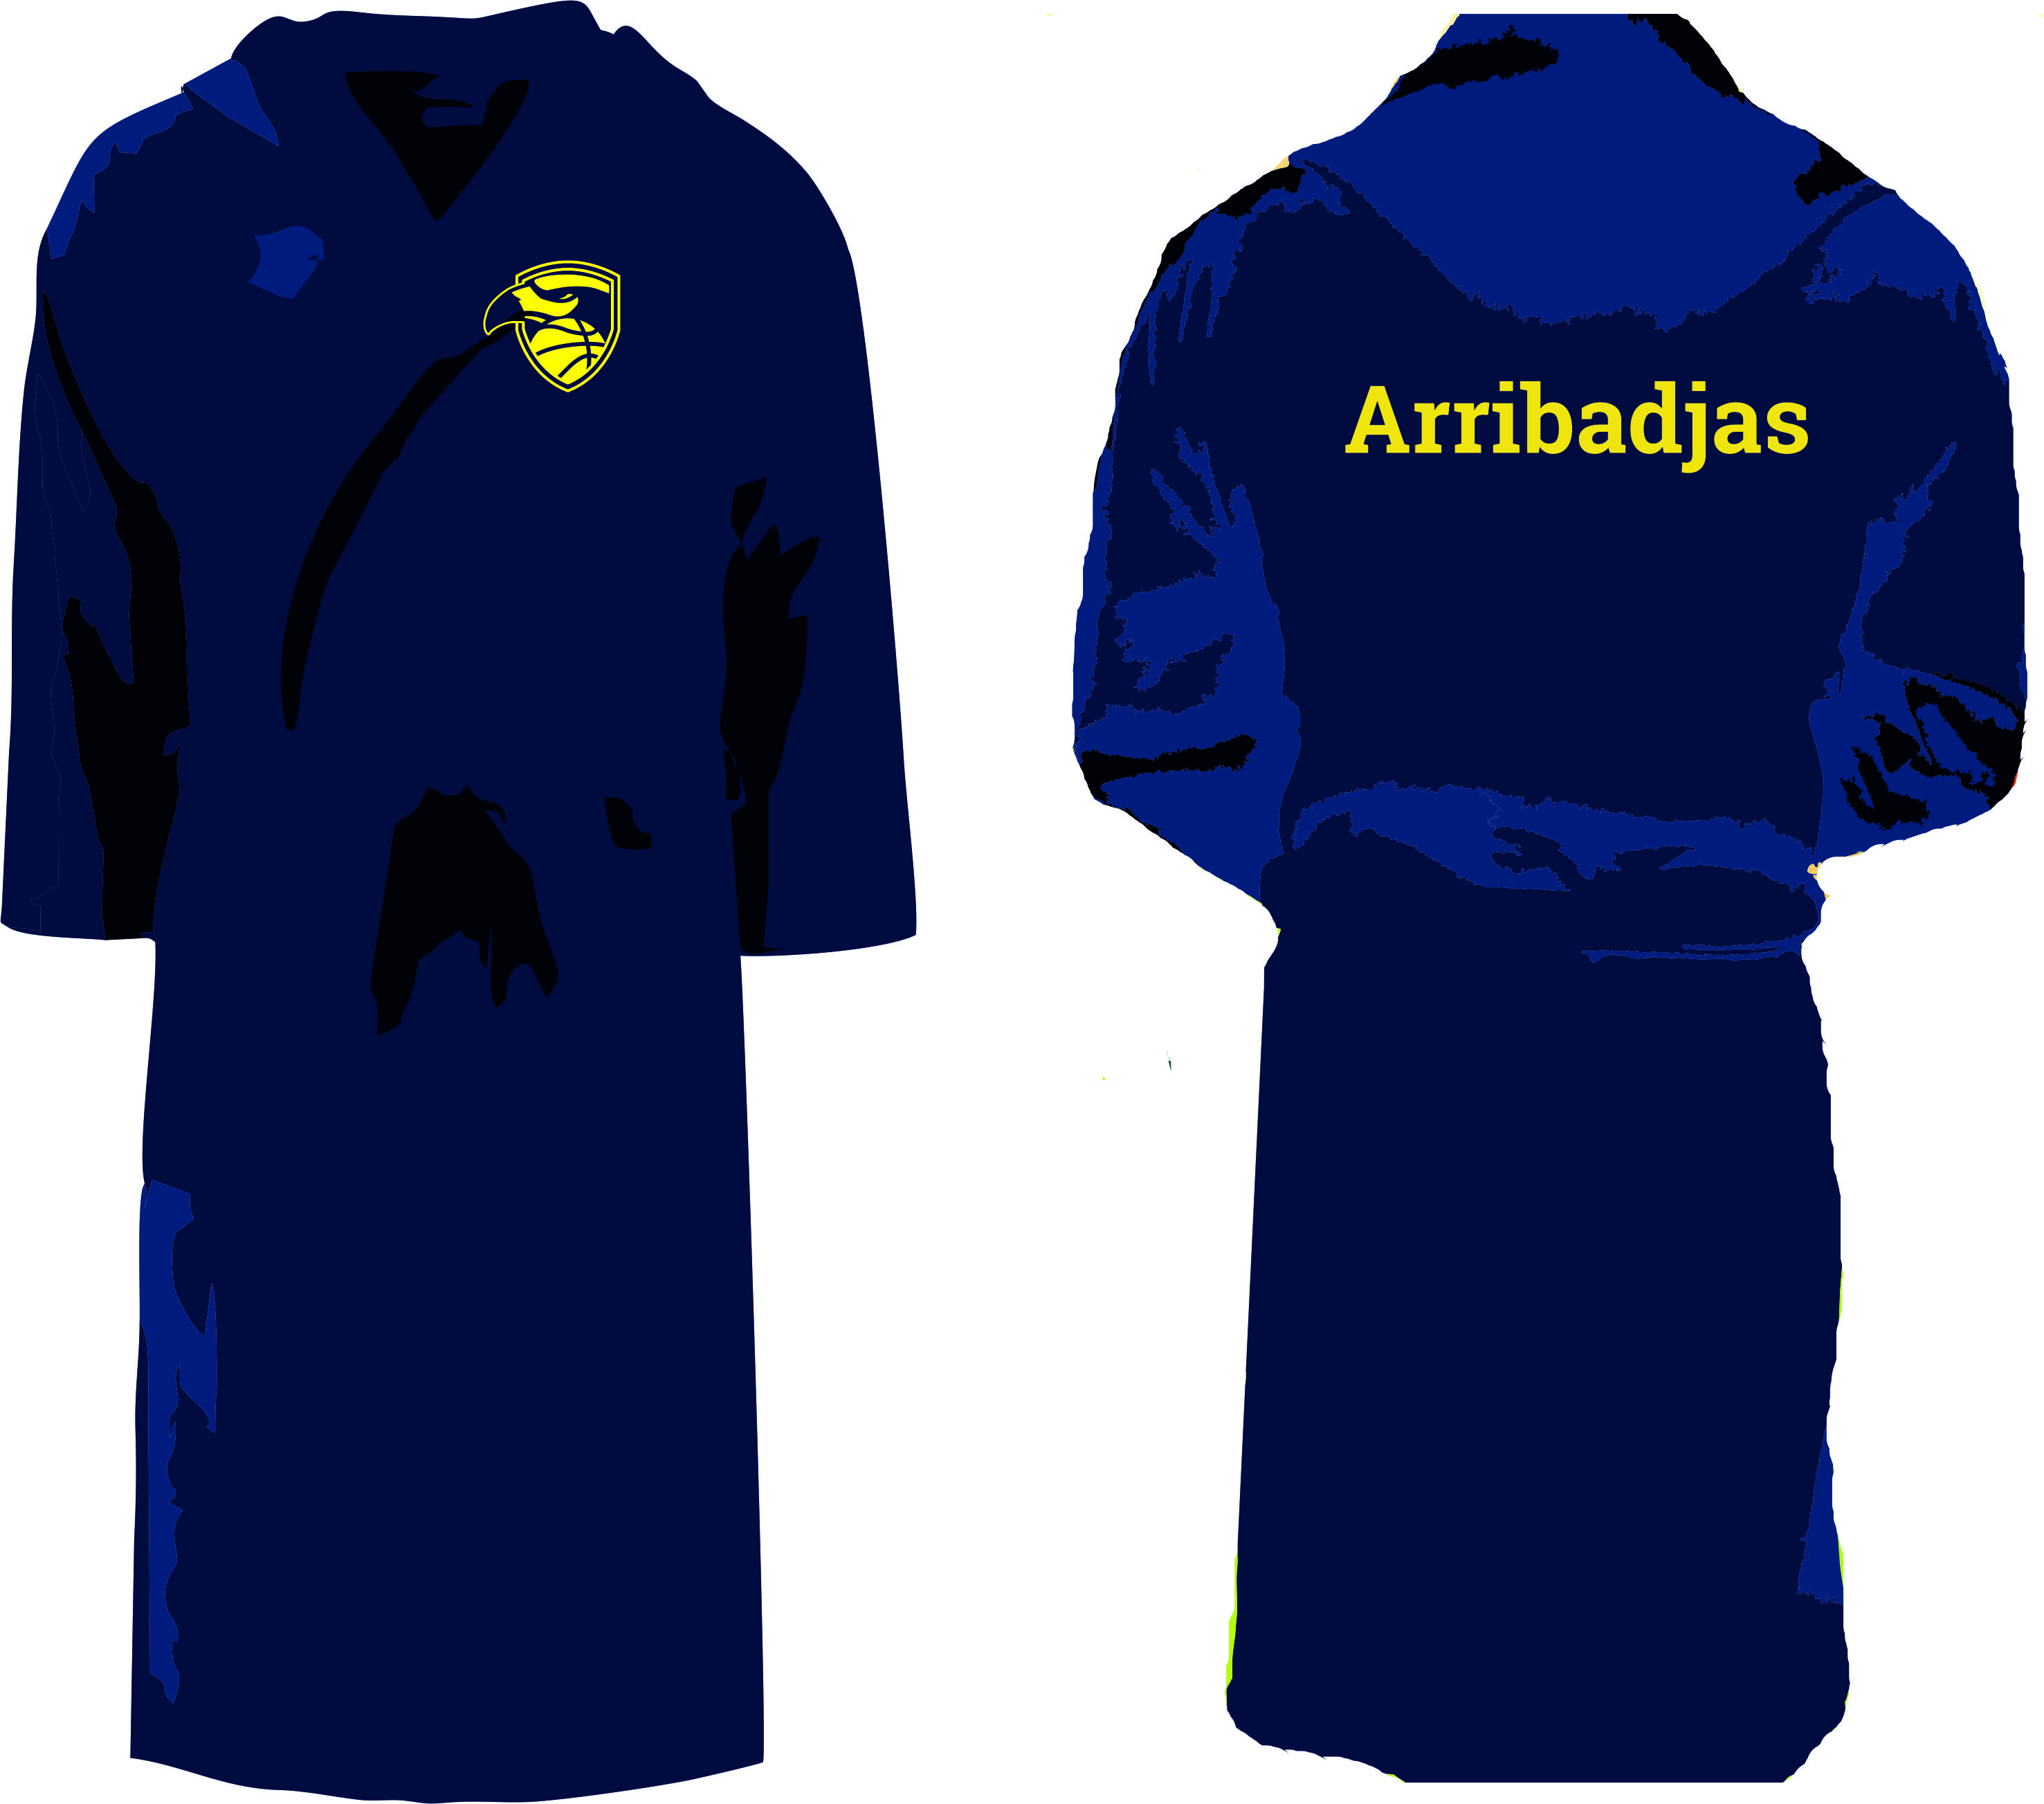 Arribathrobe-image